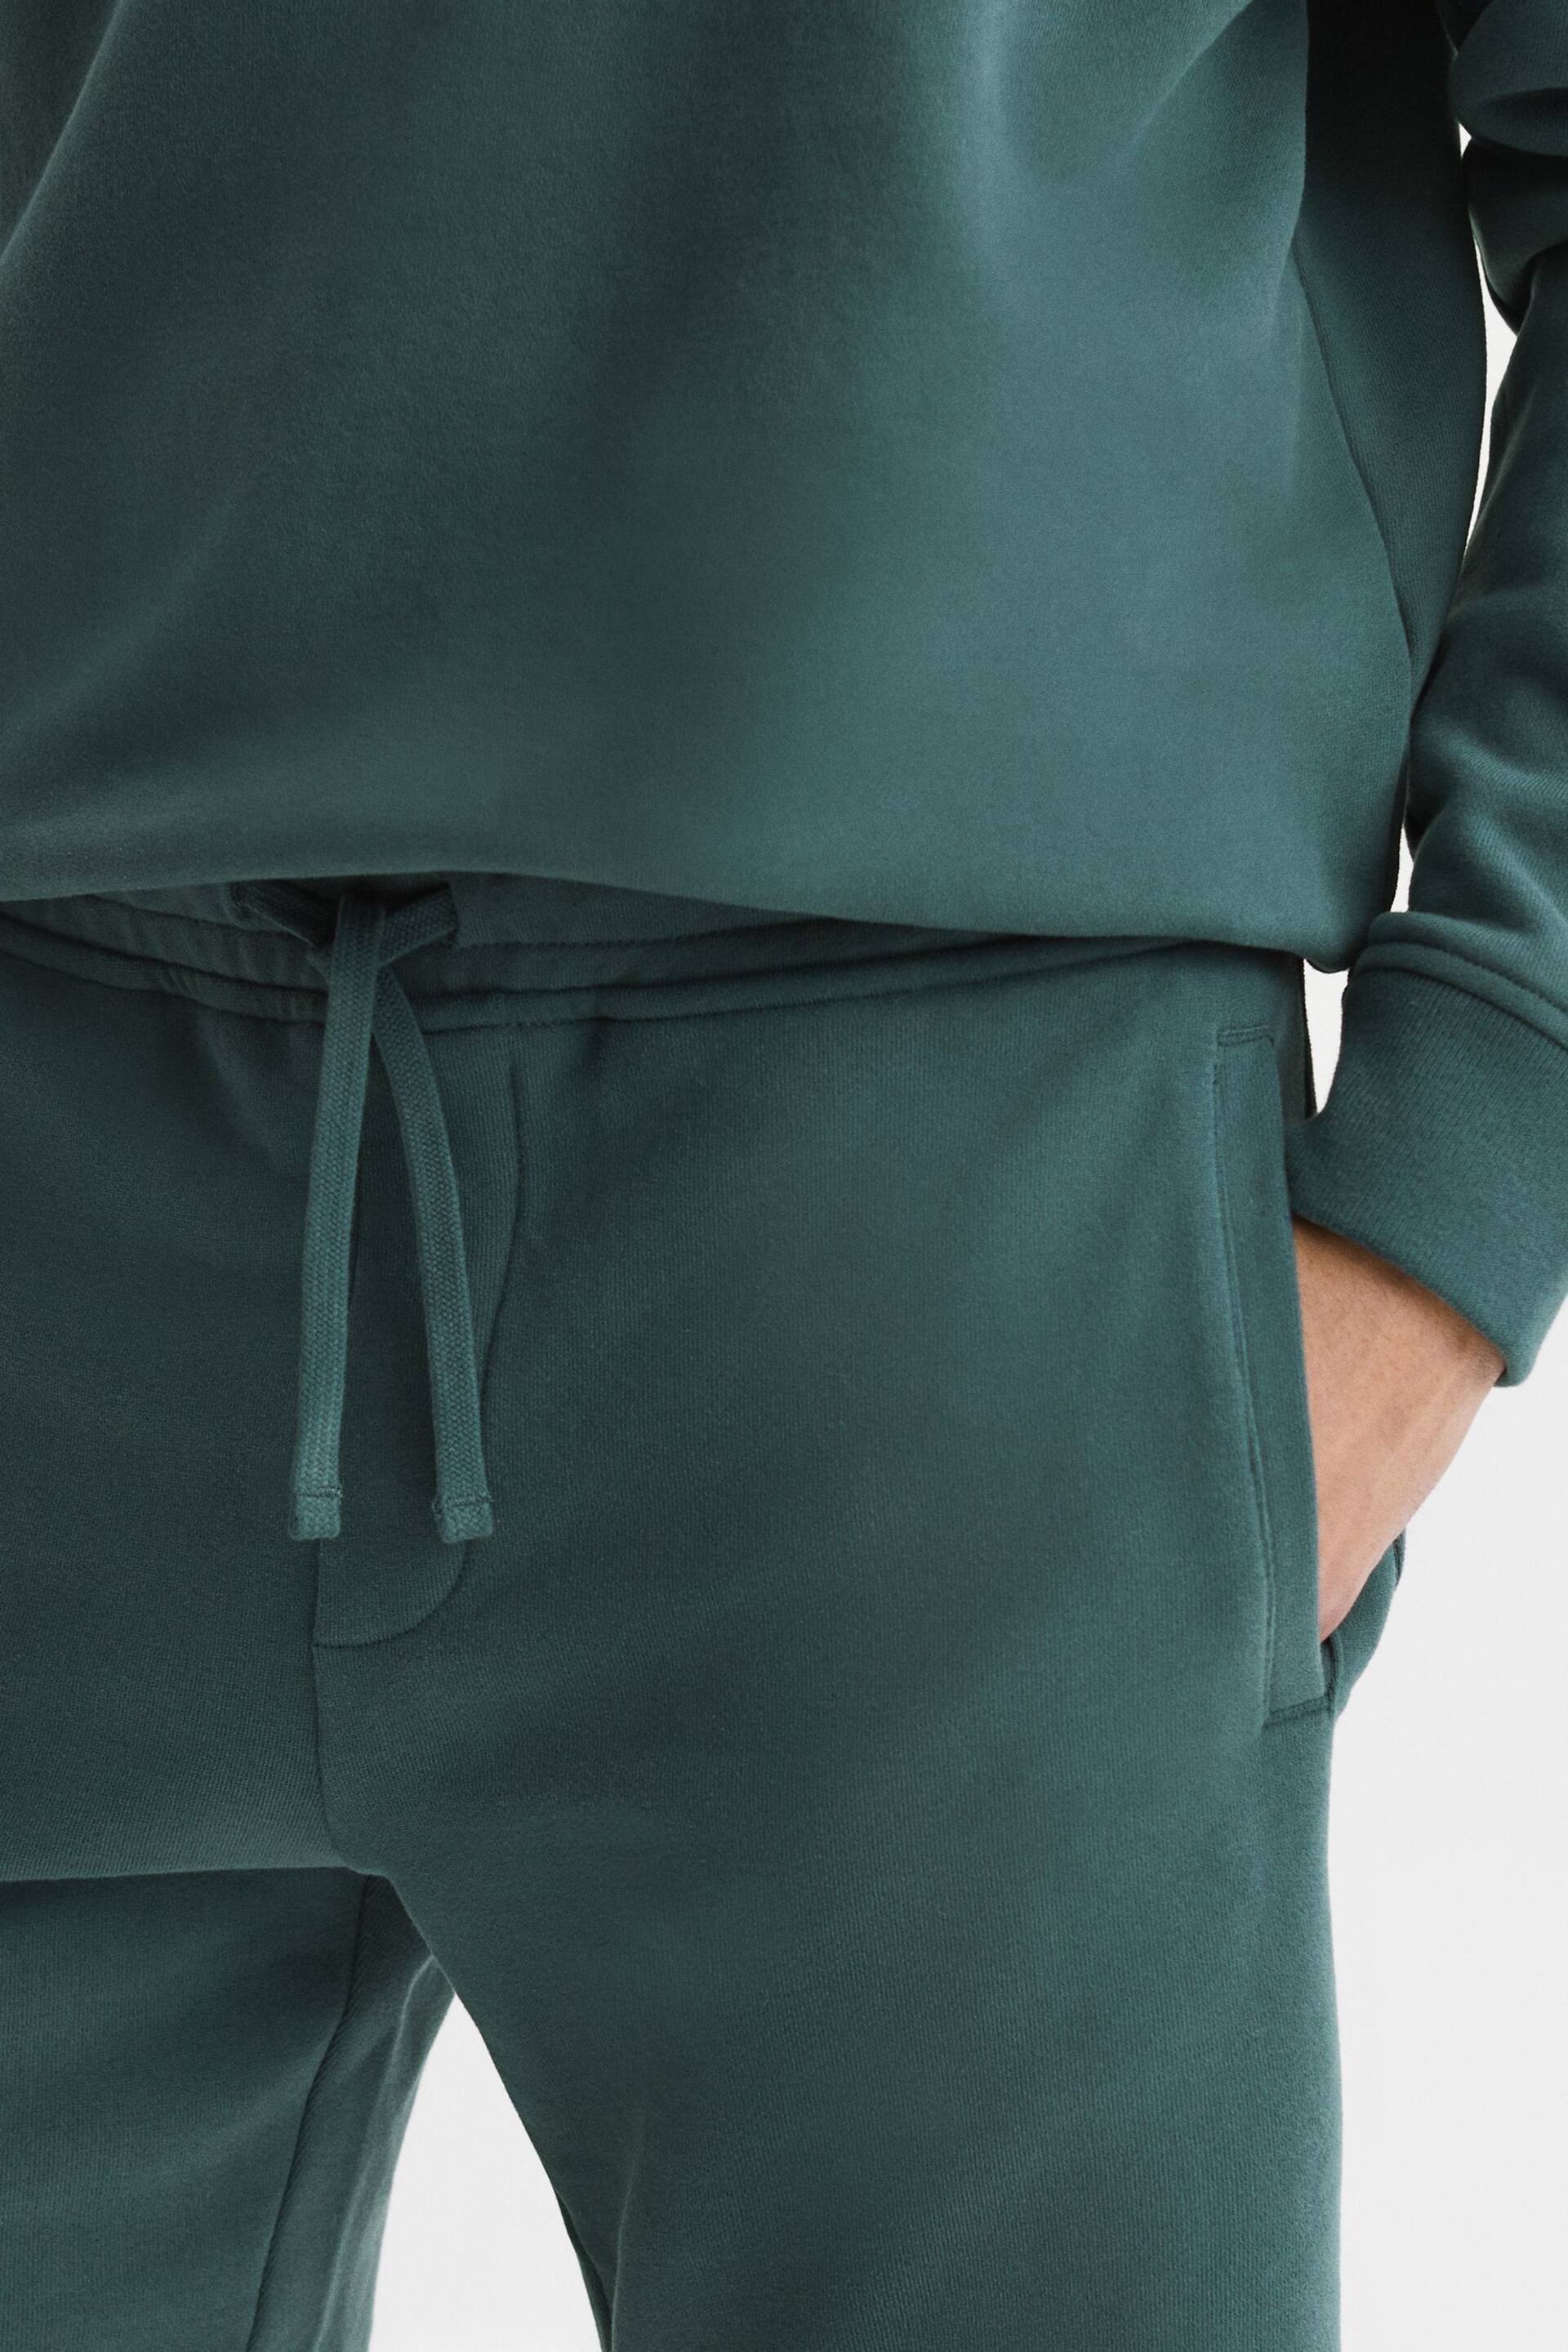 Reiss Midnight Green Henry Garment Dye Jersey Shorts - Image 4 of 5